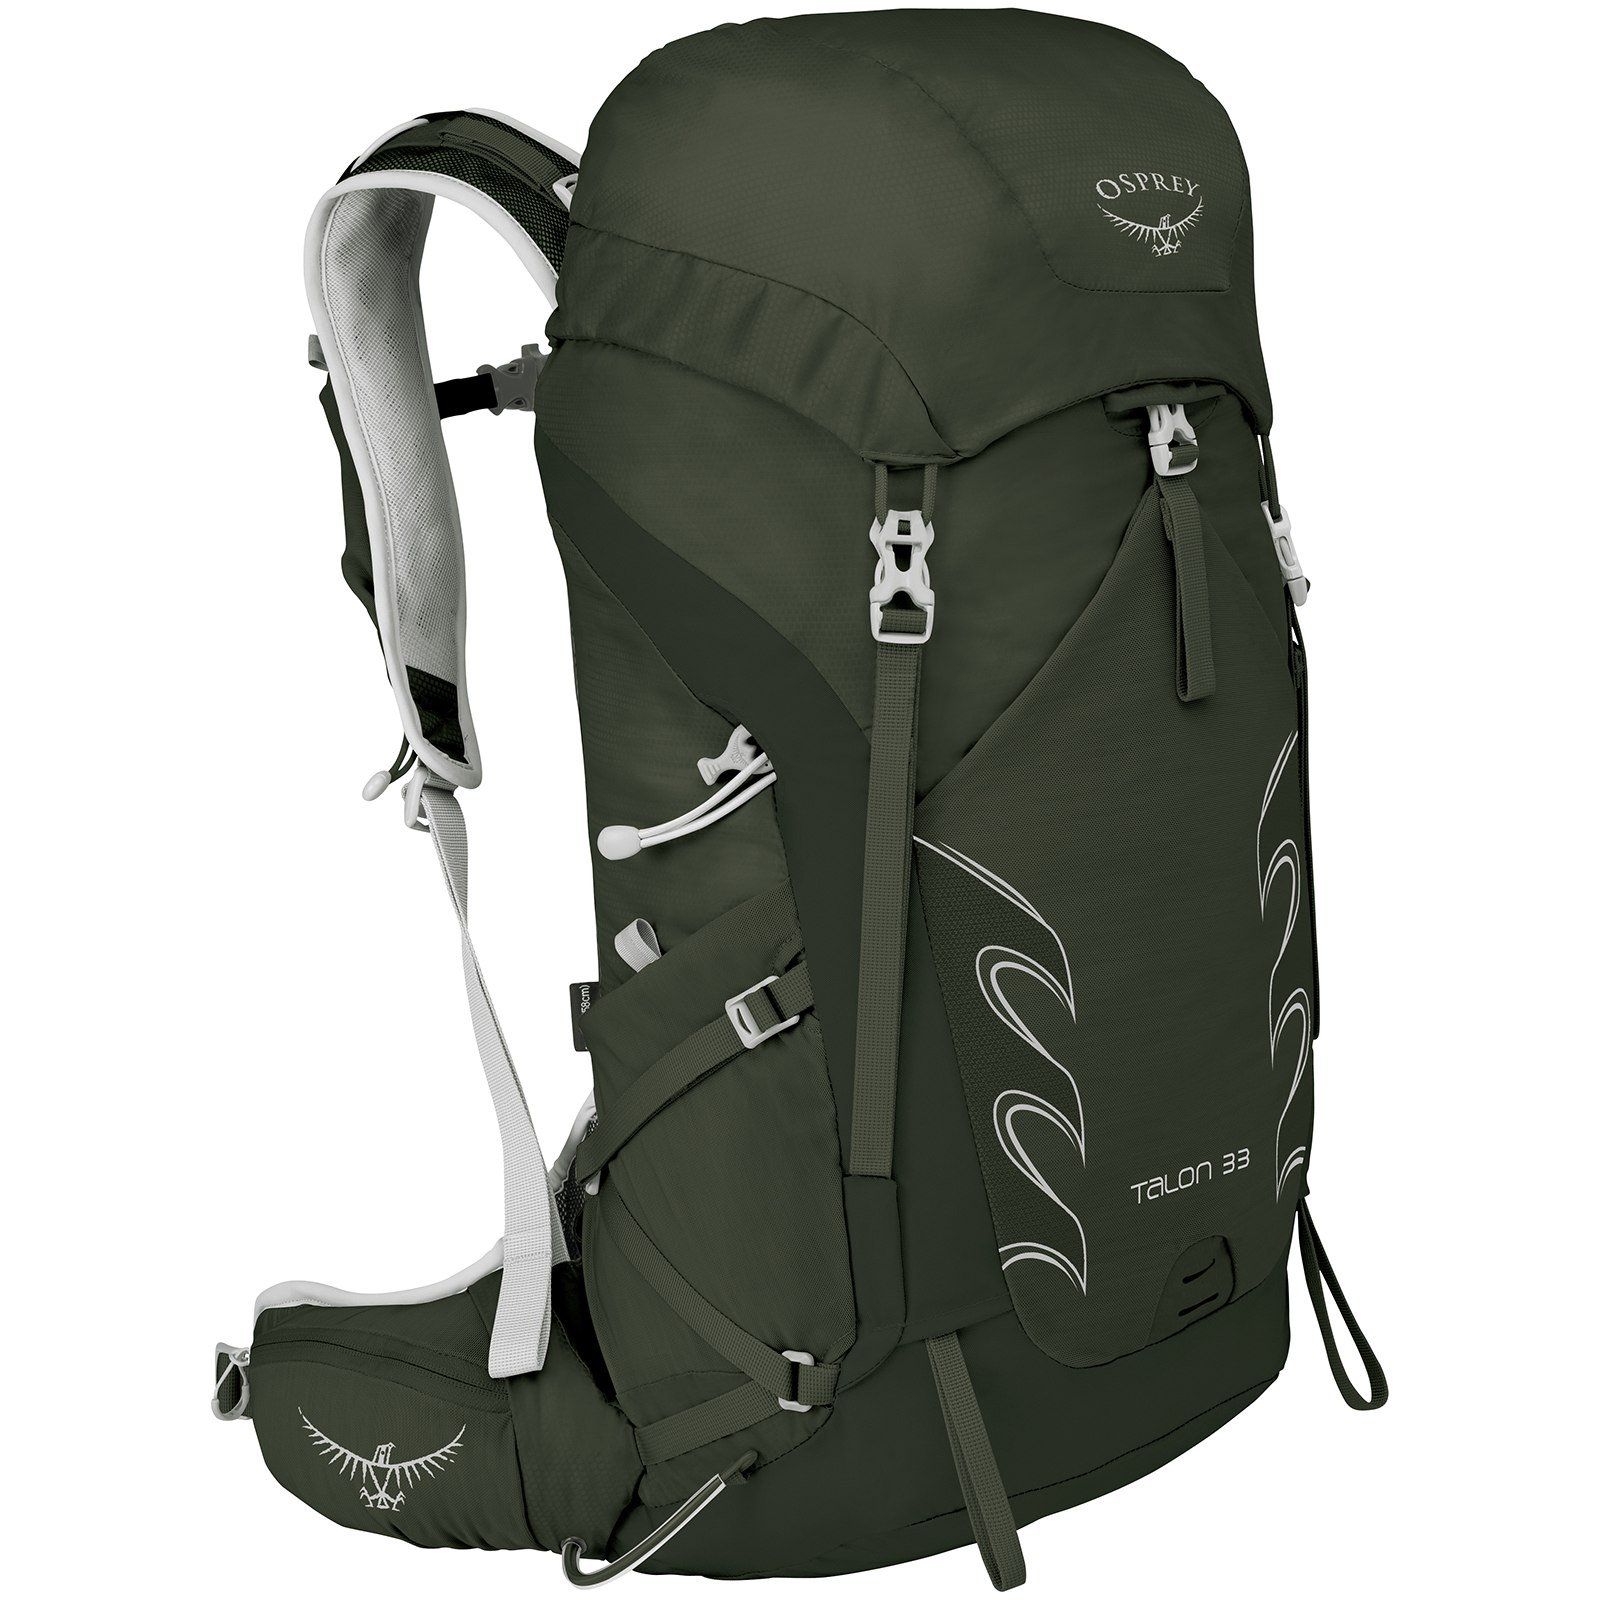 OSPREY TALON 33 pack backpack hiking OLIVE DARK GREEN